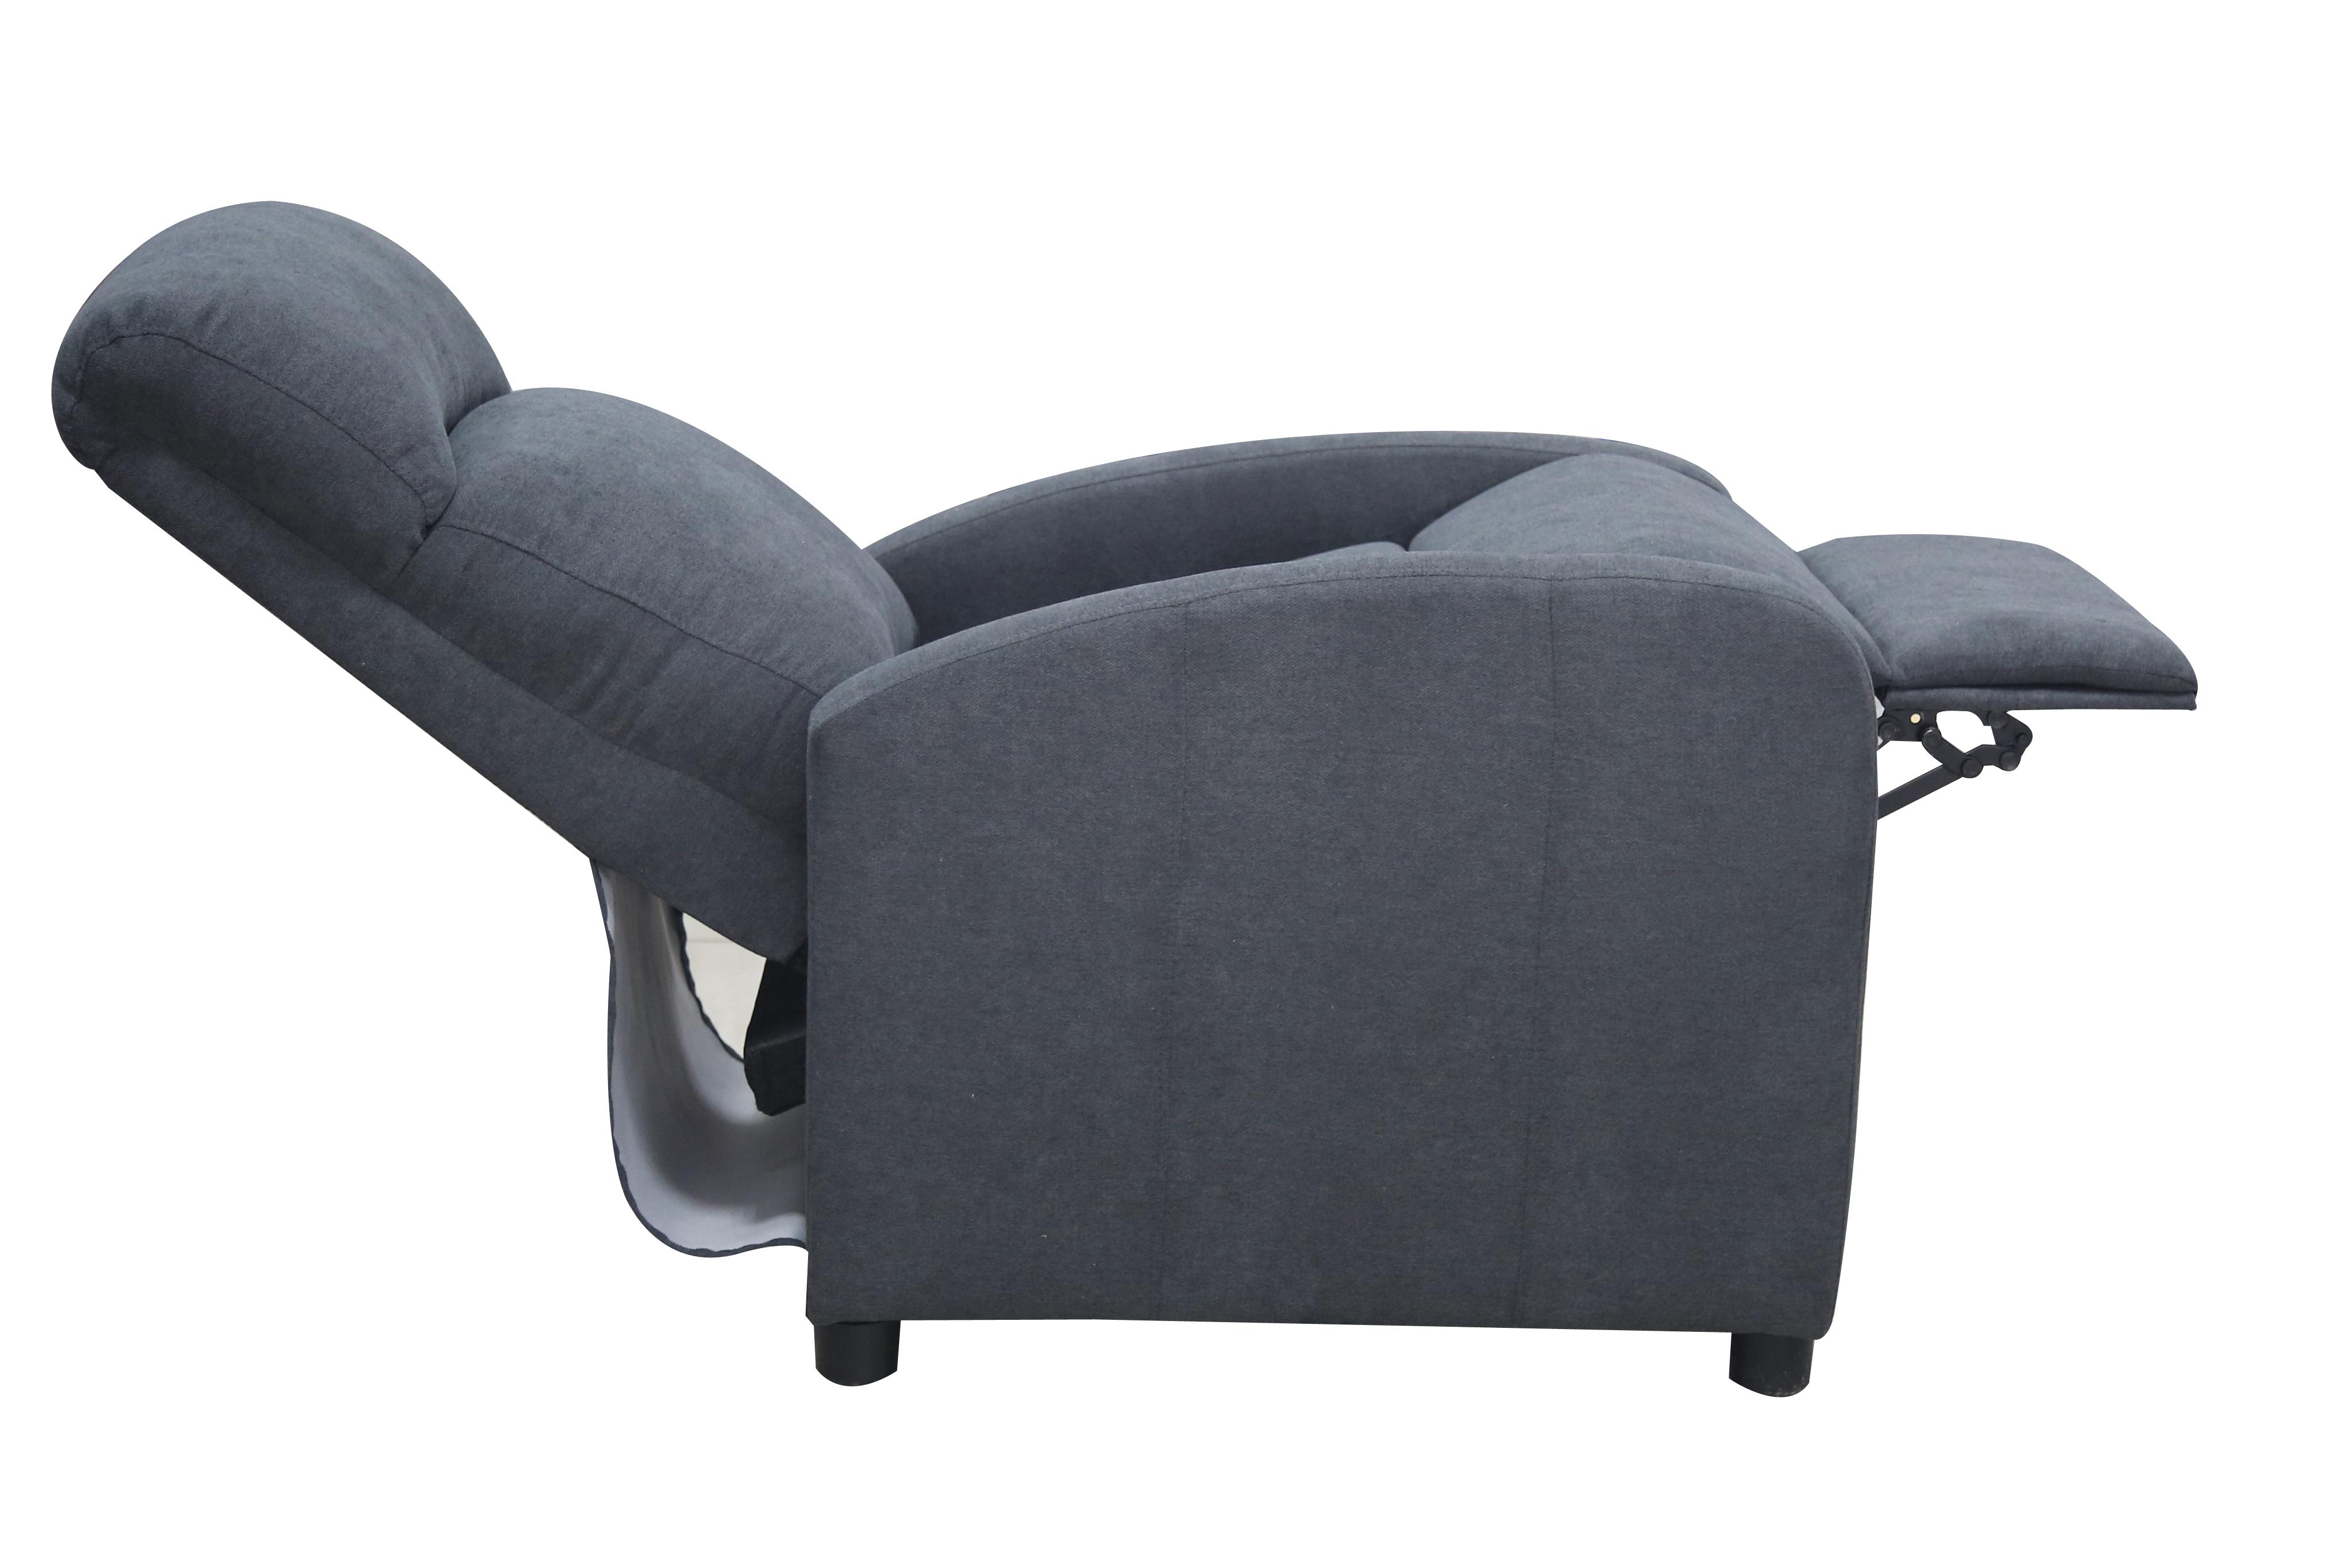 Relaxsessel in Grau mit Relaxfunktion - Grau, Modern, Textil (65/101/91cm) - Modern Living